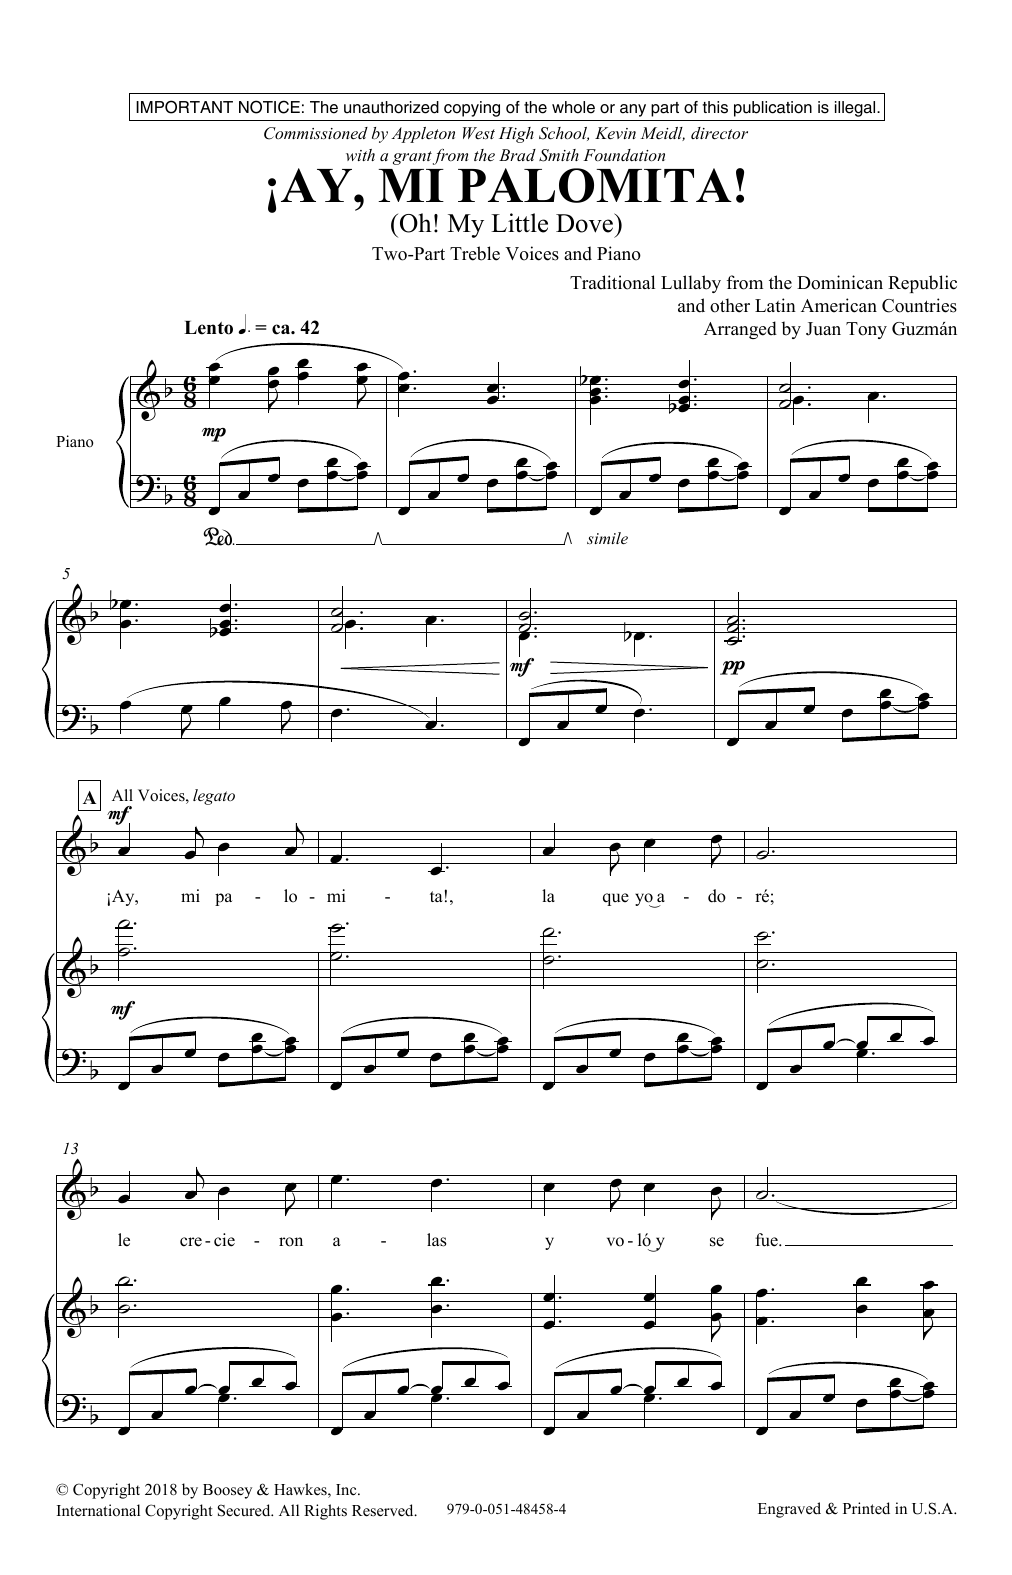 Juan-Tony Guzmán Ay! Mi Palomita (Oh! My Little Dove) Sheet Music Notes & Chords for 2-Part Choir - Download or Print PDF